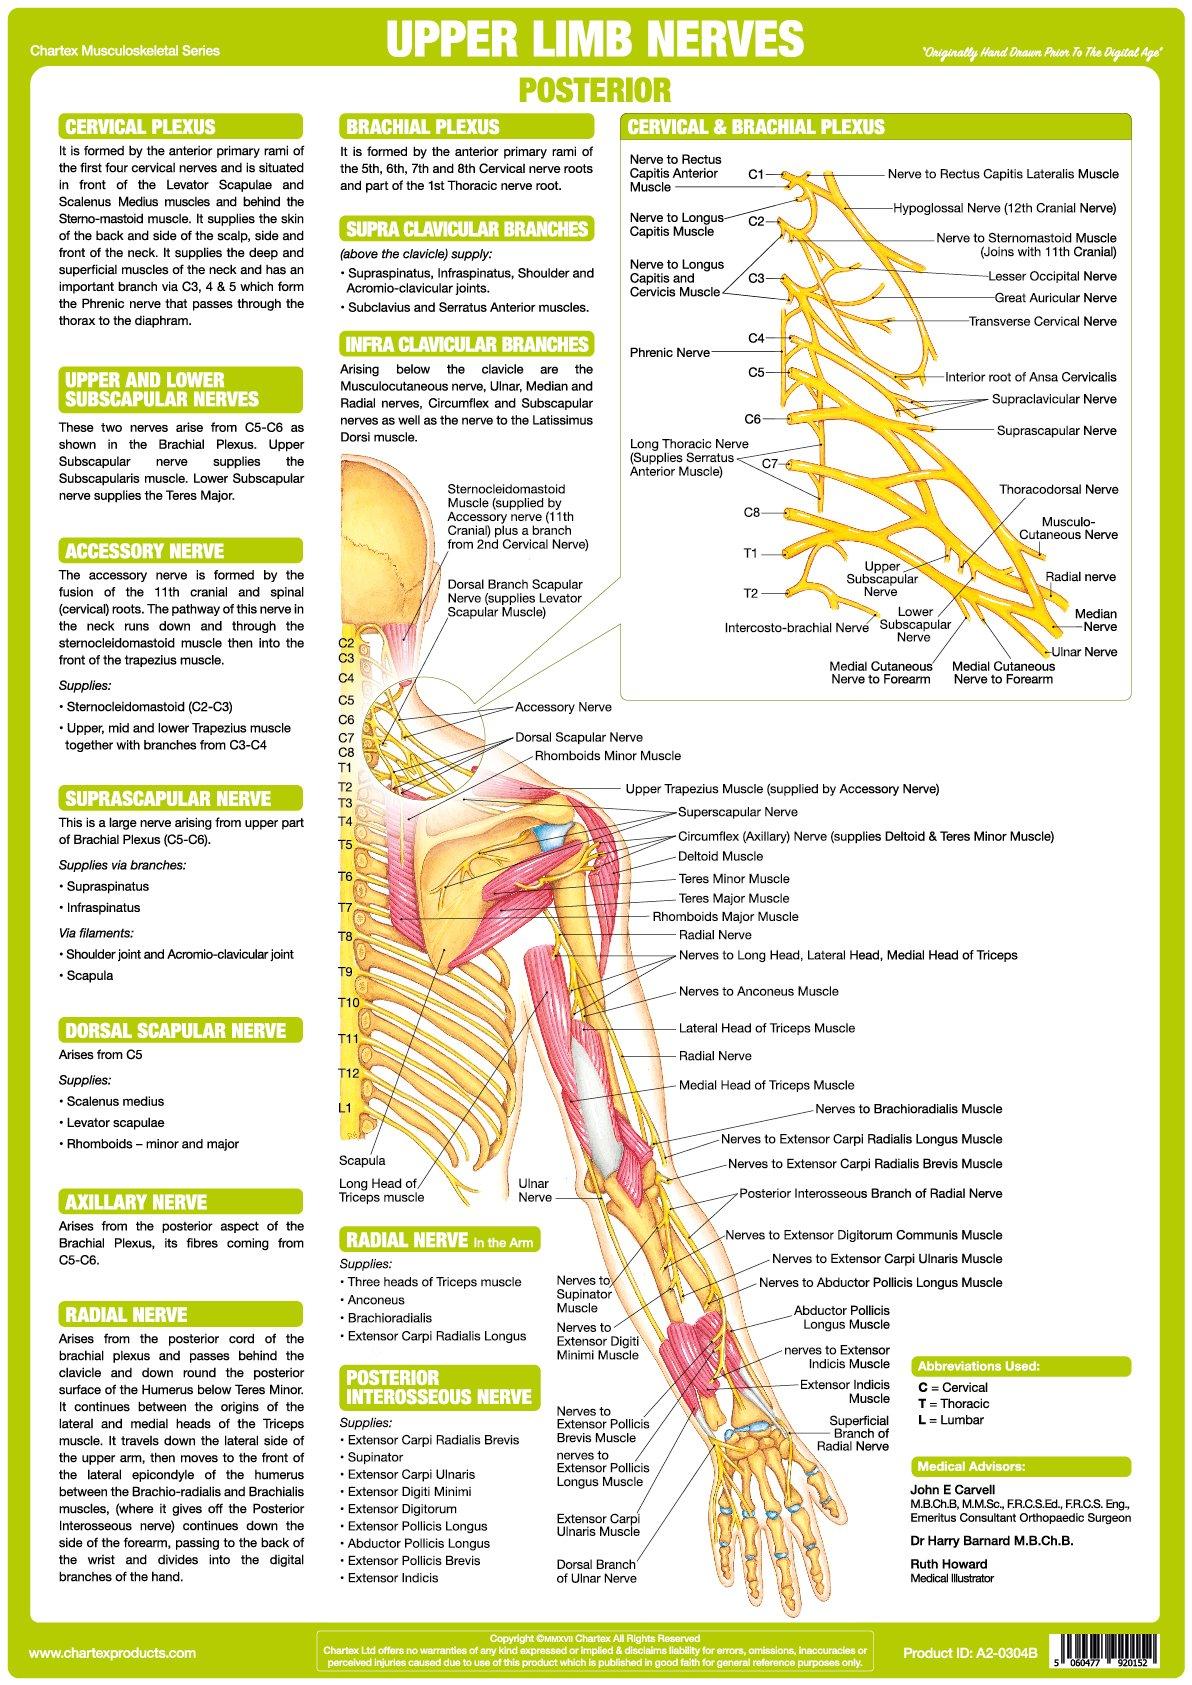 Upper Limb Nerve Chart - Posterior